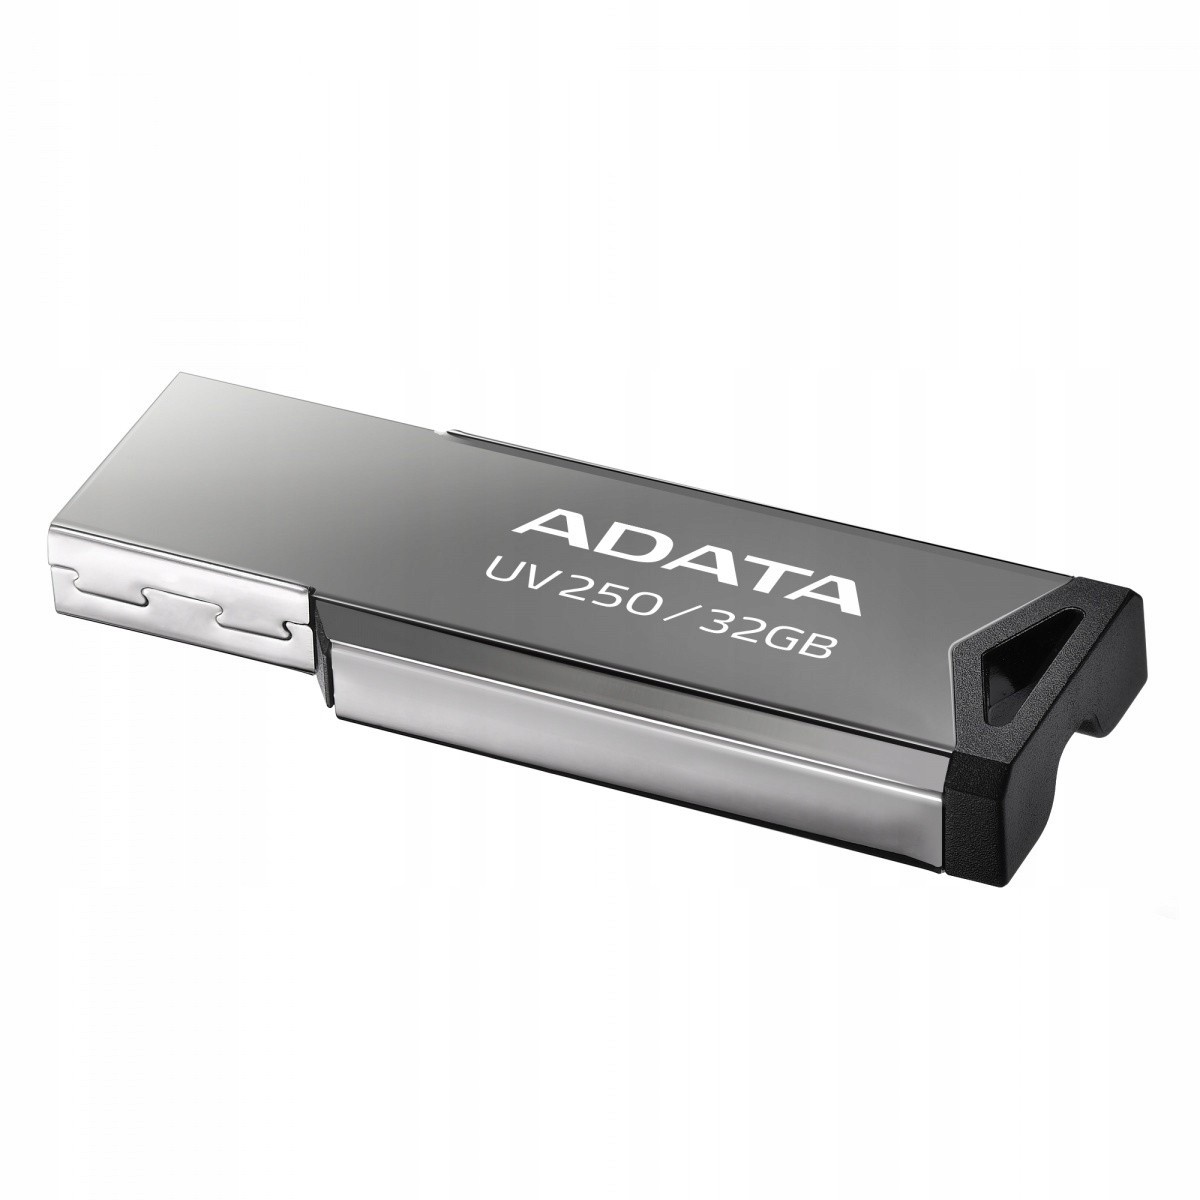 Flash disk Adata UV250 32GB